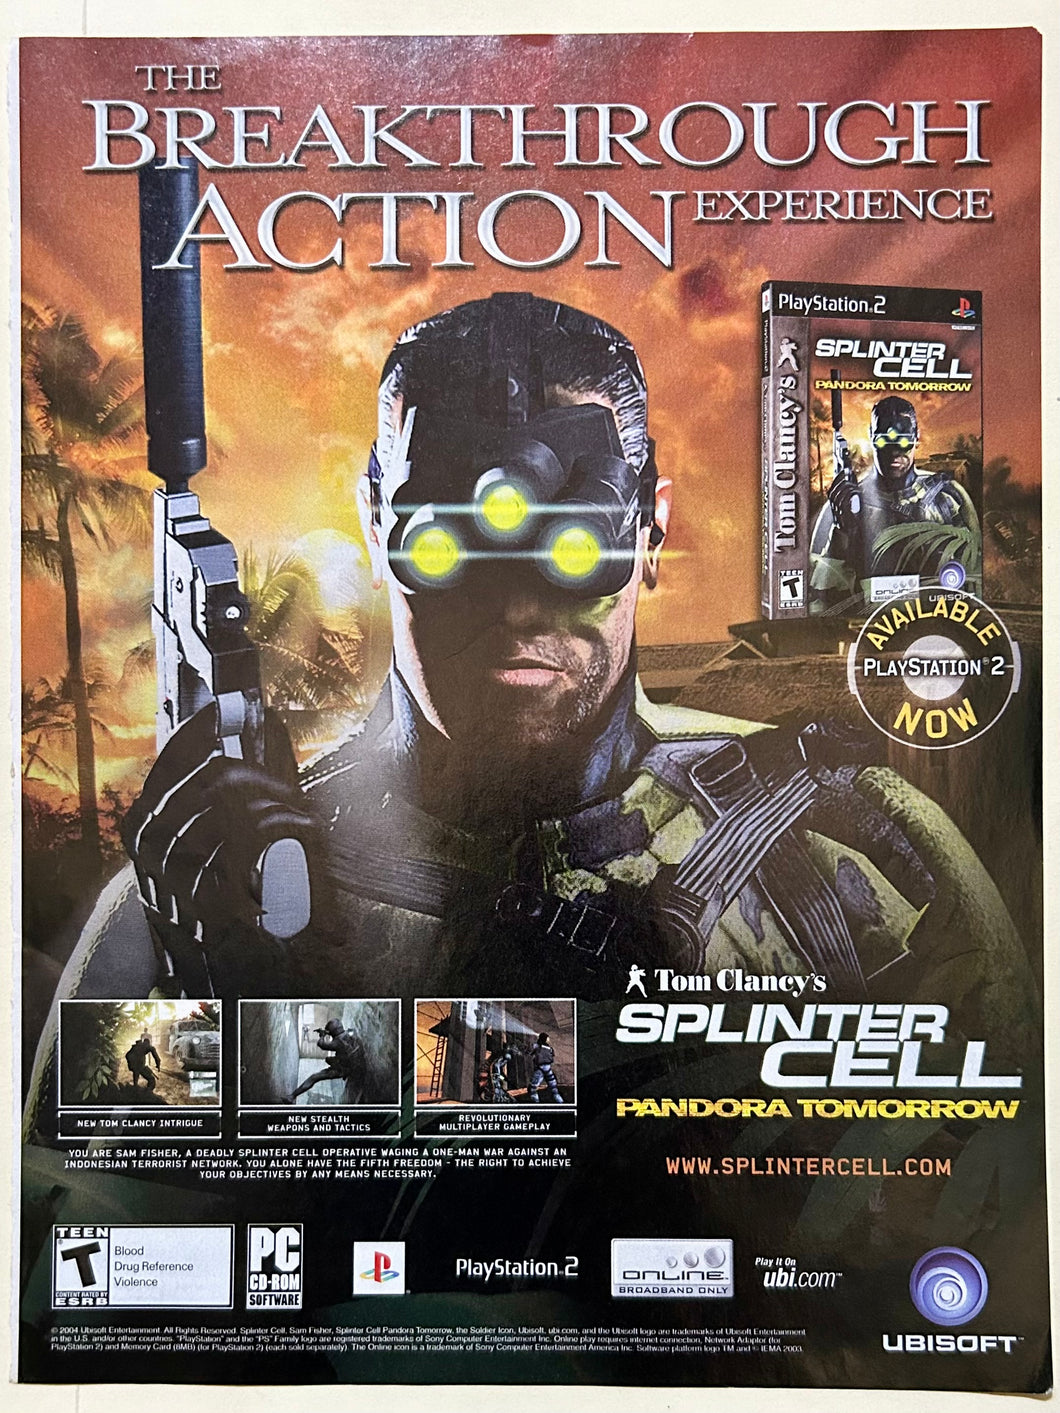 Tom Clancy's Splinter Cell: Pandora Tomorrow - PS2 - Original Vintage Advertisement - Print Ads - Laminated A4 Poster